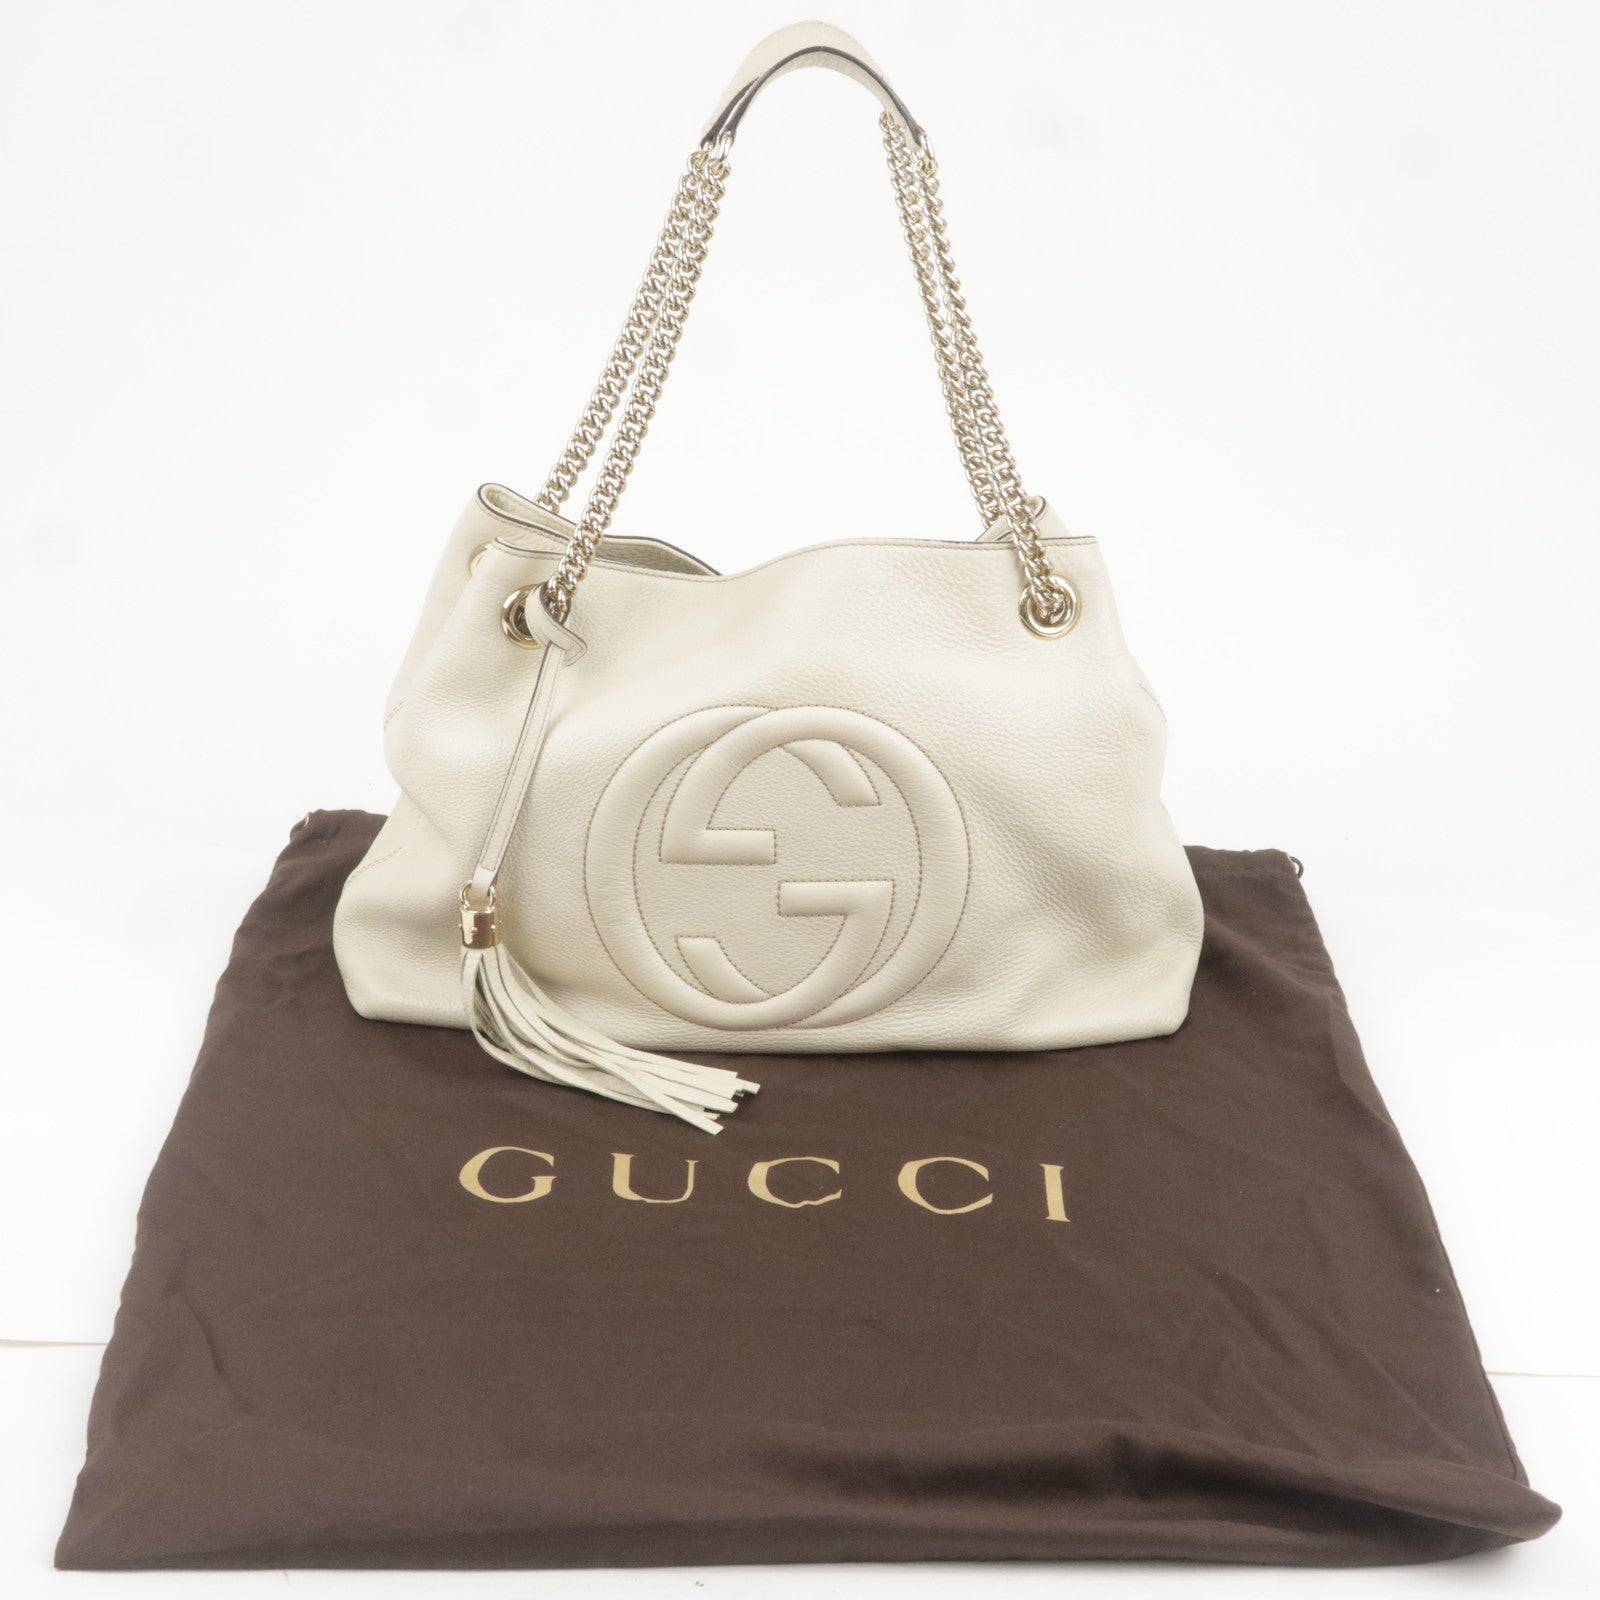 URGENT SALE!!! Authentic Gucci Soho Disco Bag, Luxury, Bags